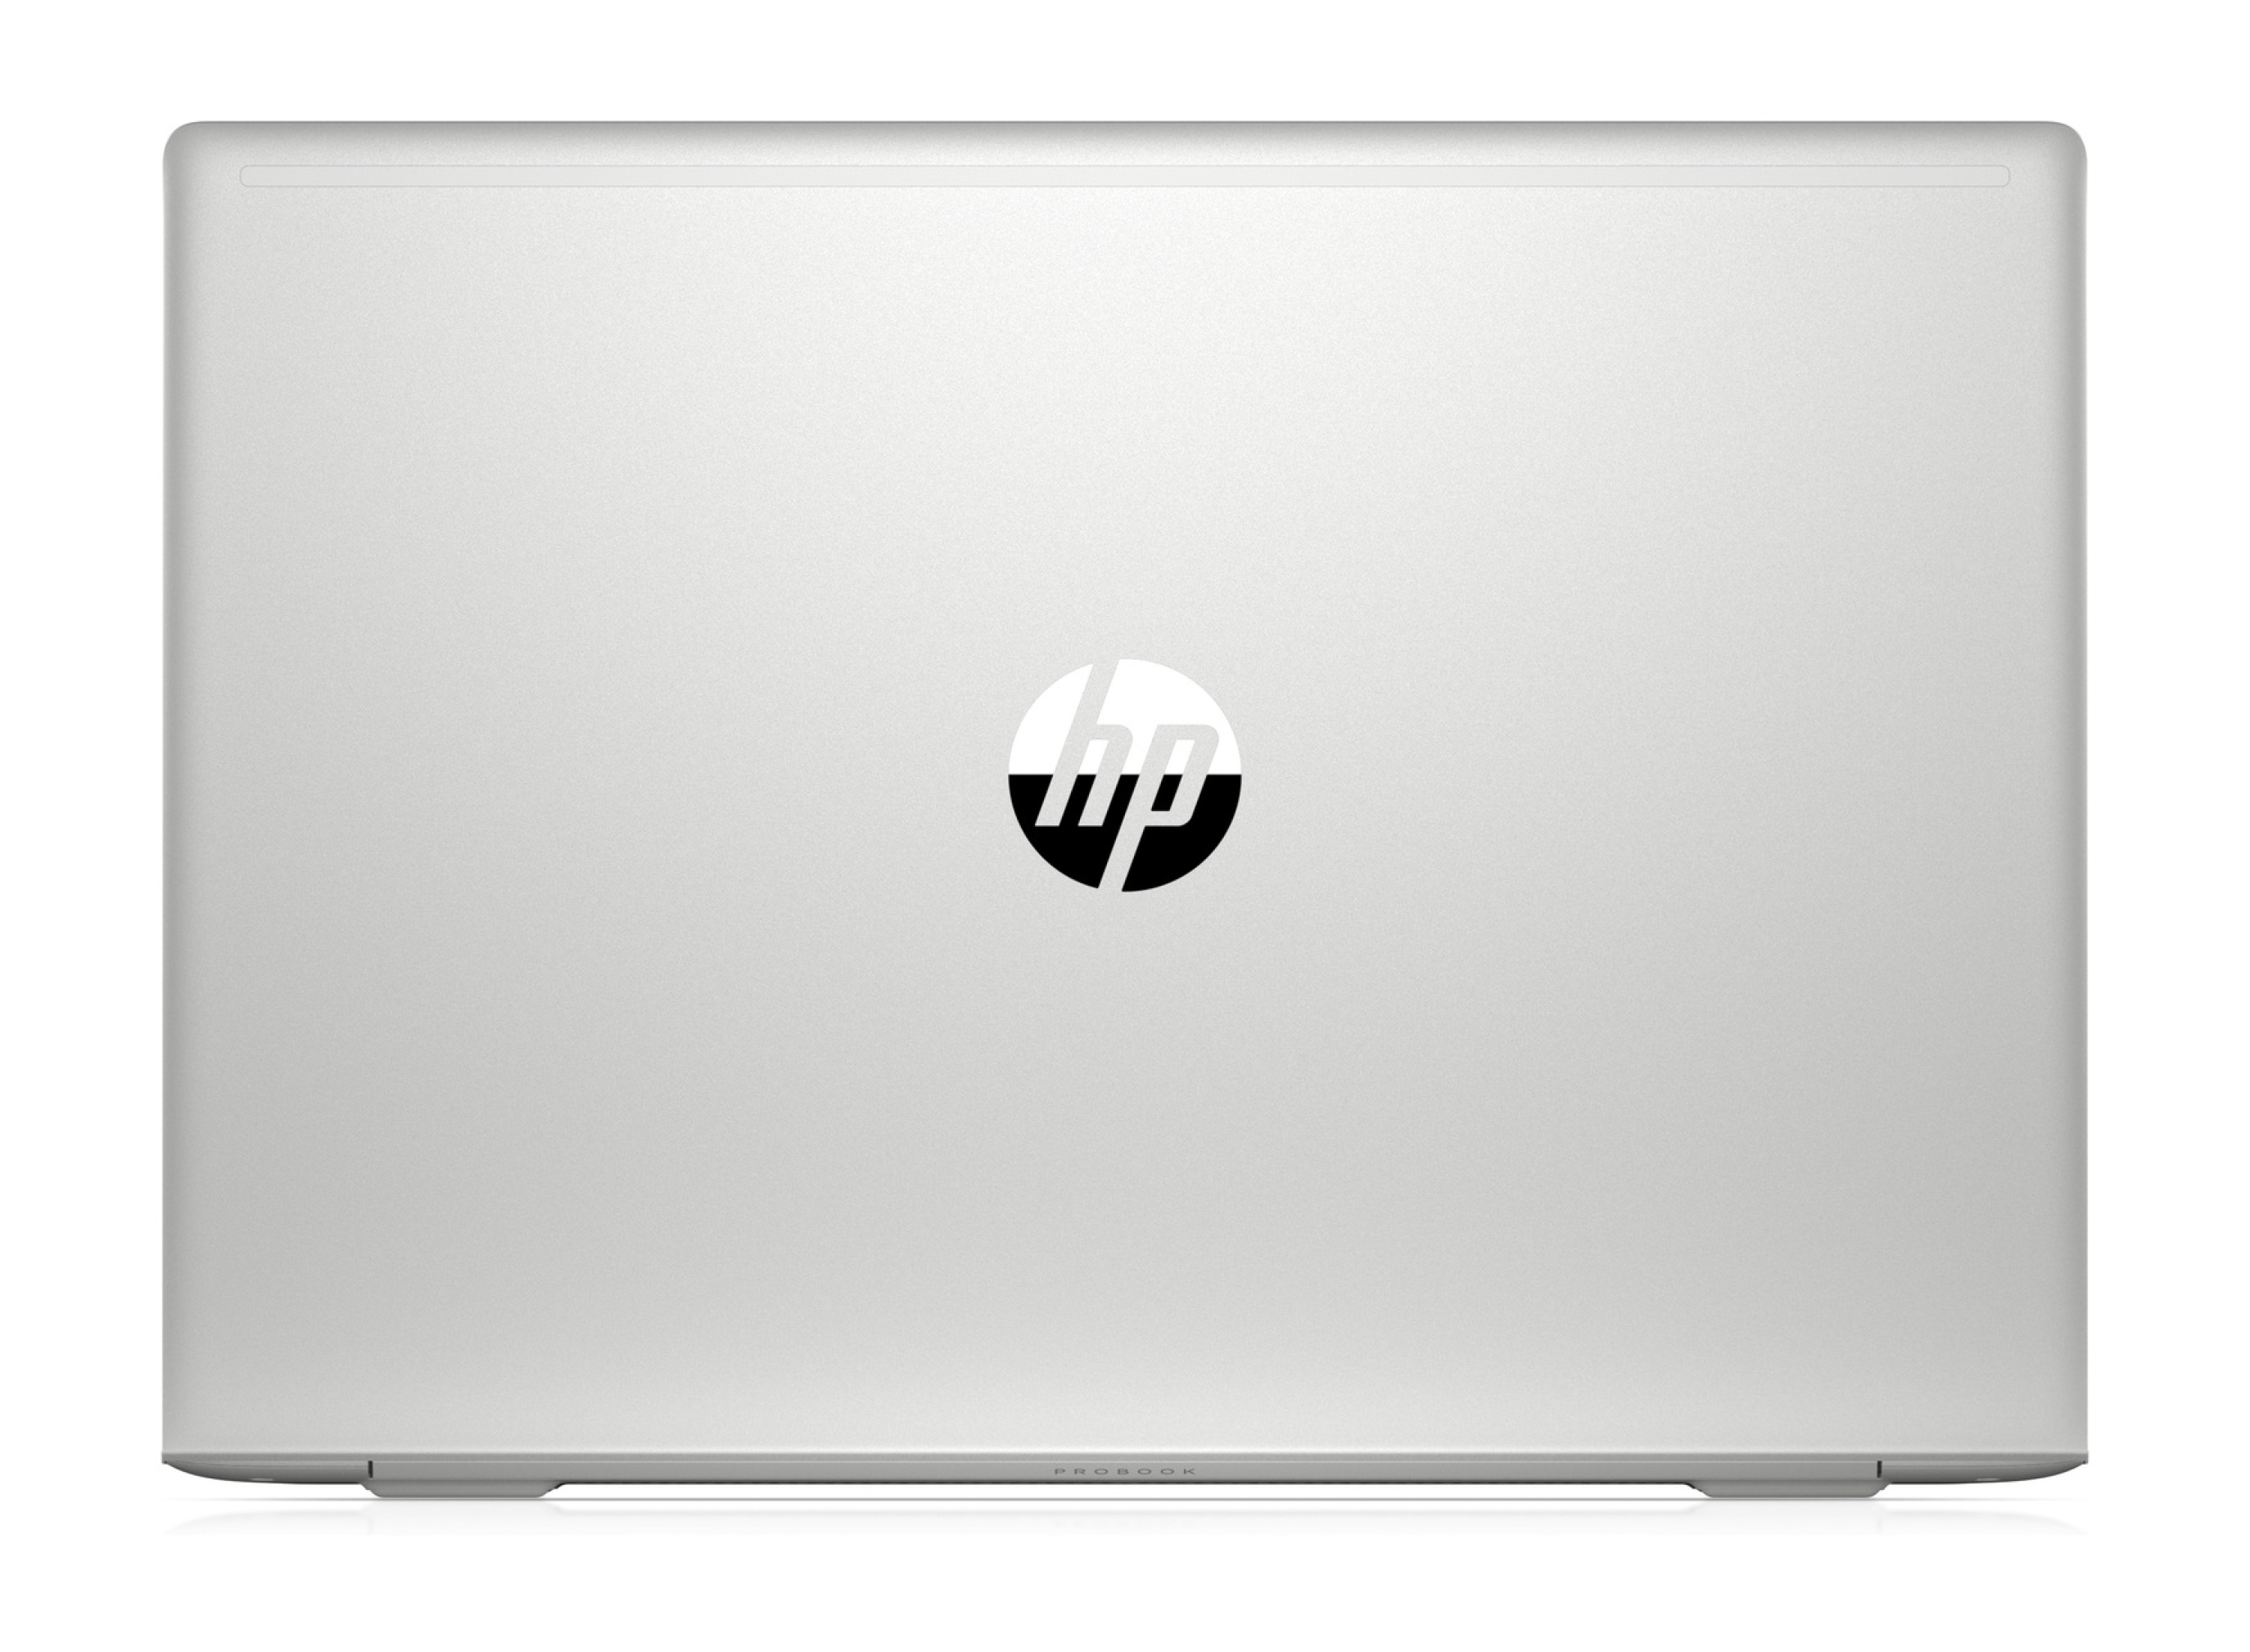  HP ProBook 455 G6 خرید و قیمت لپ تاپ اچ پی پرو بوک 455 | لاکچری لپ تاپ 